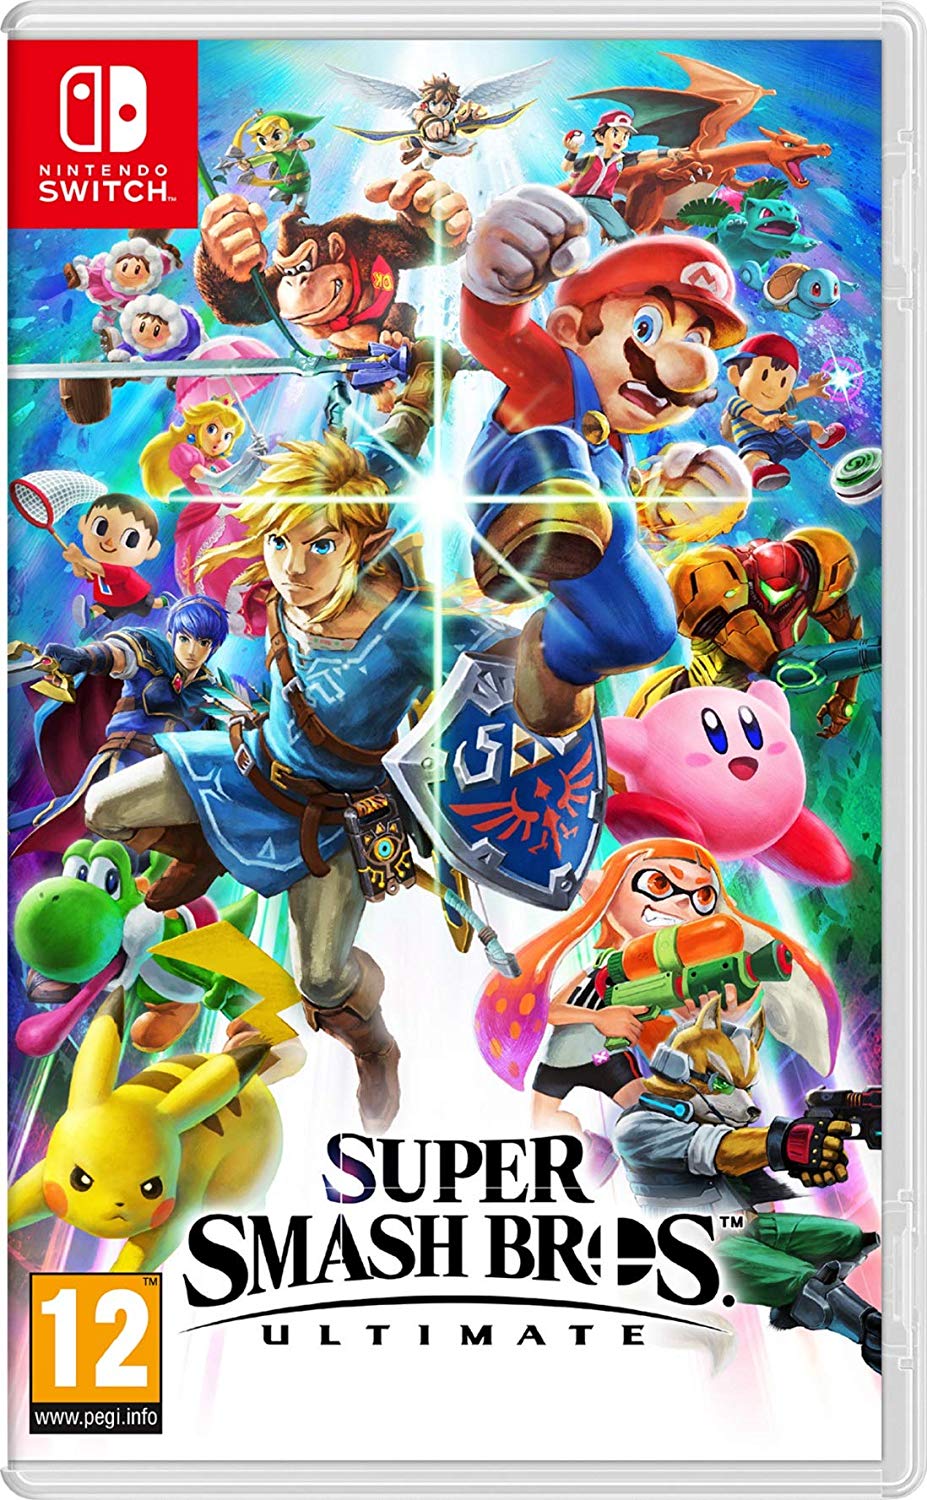 Super Smash Bros - Ultimate Digital Download Key (Nintendo Switch)